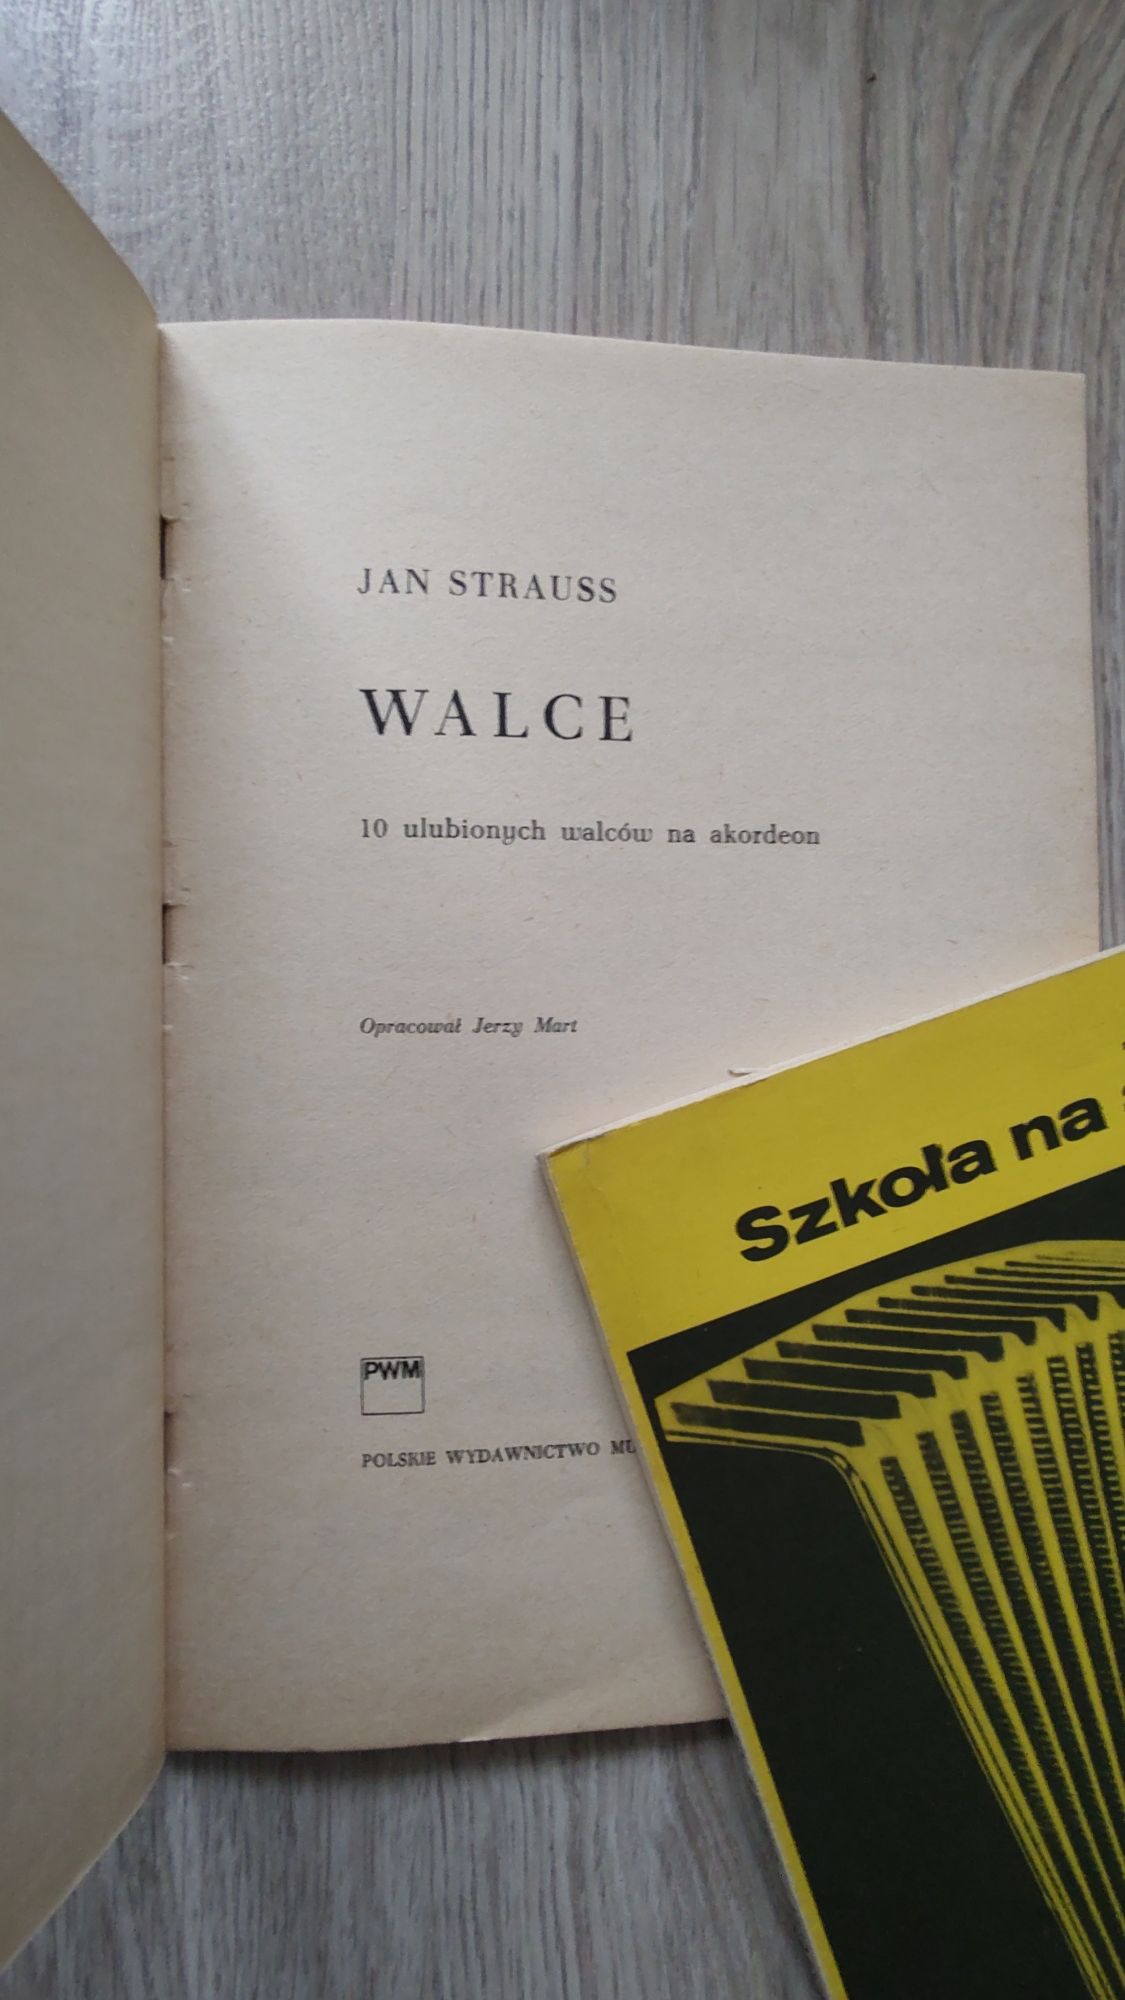 Nuty na akordeon: Jan Strauss "Walce"